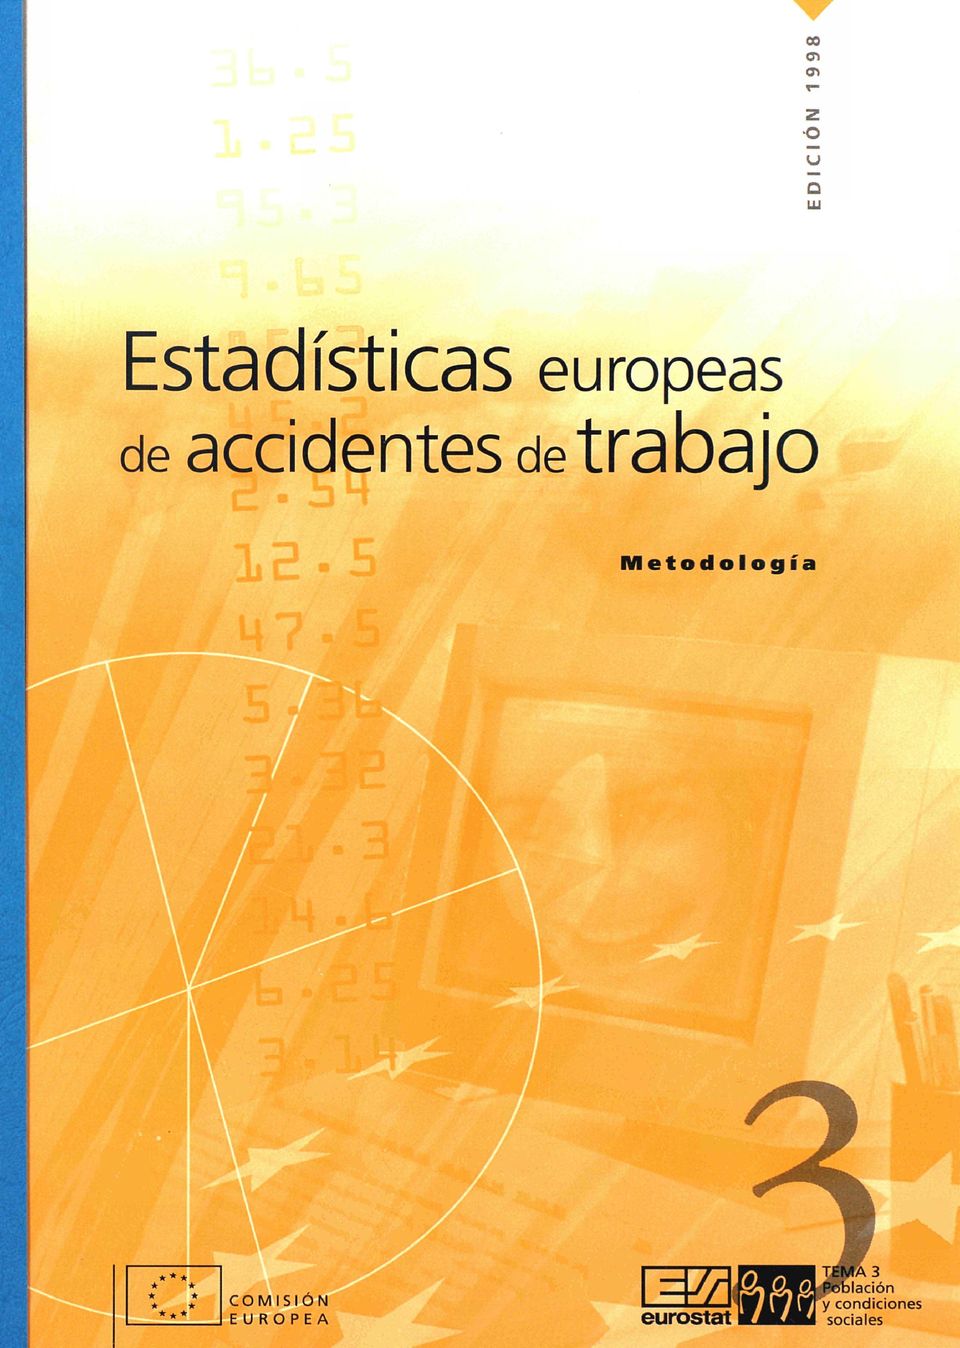 etodología COMIIÓN EUROPEA = L